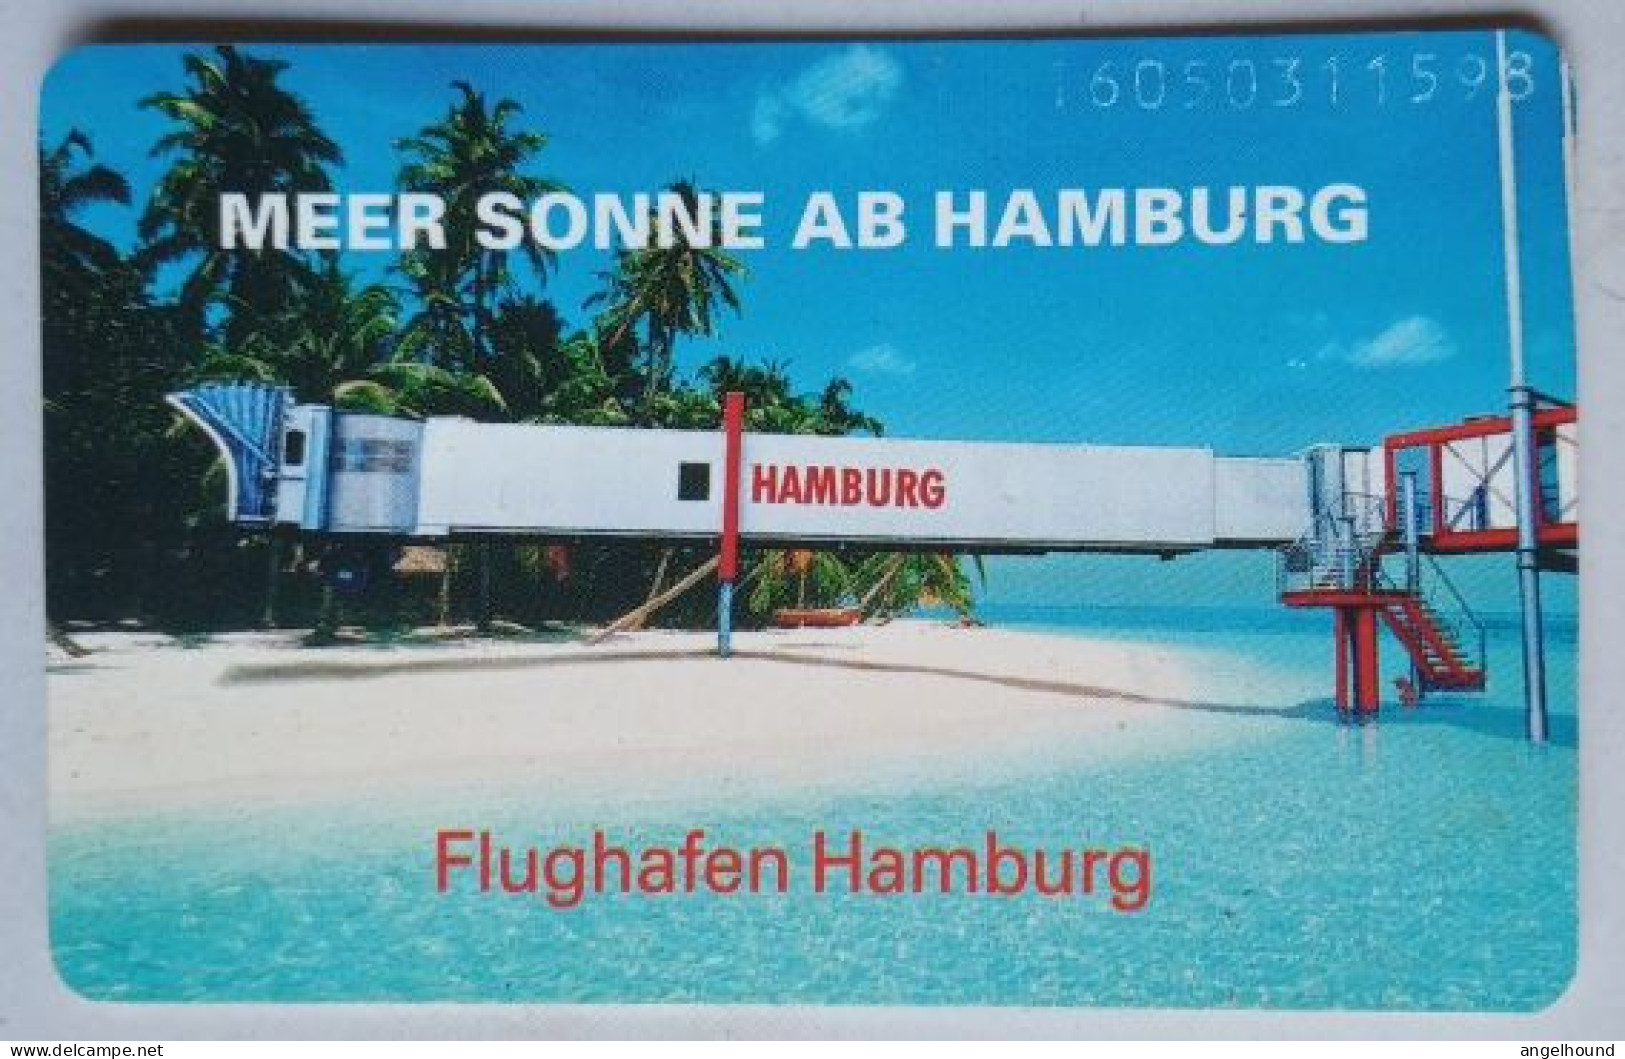 Germany 6 DM  MINT K 011 07.96 2500 Mintage - Flughafen Hamburg / Meer Sonneab Hamburg - K-Series: Kundenserie